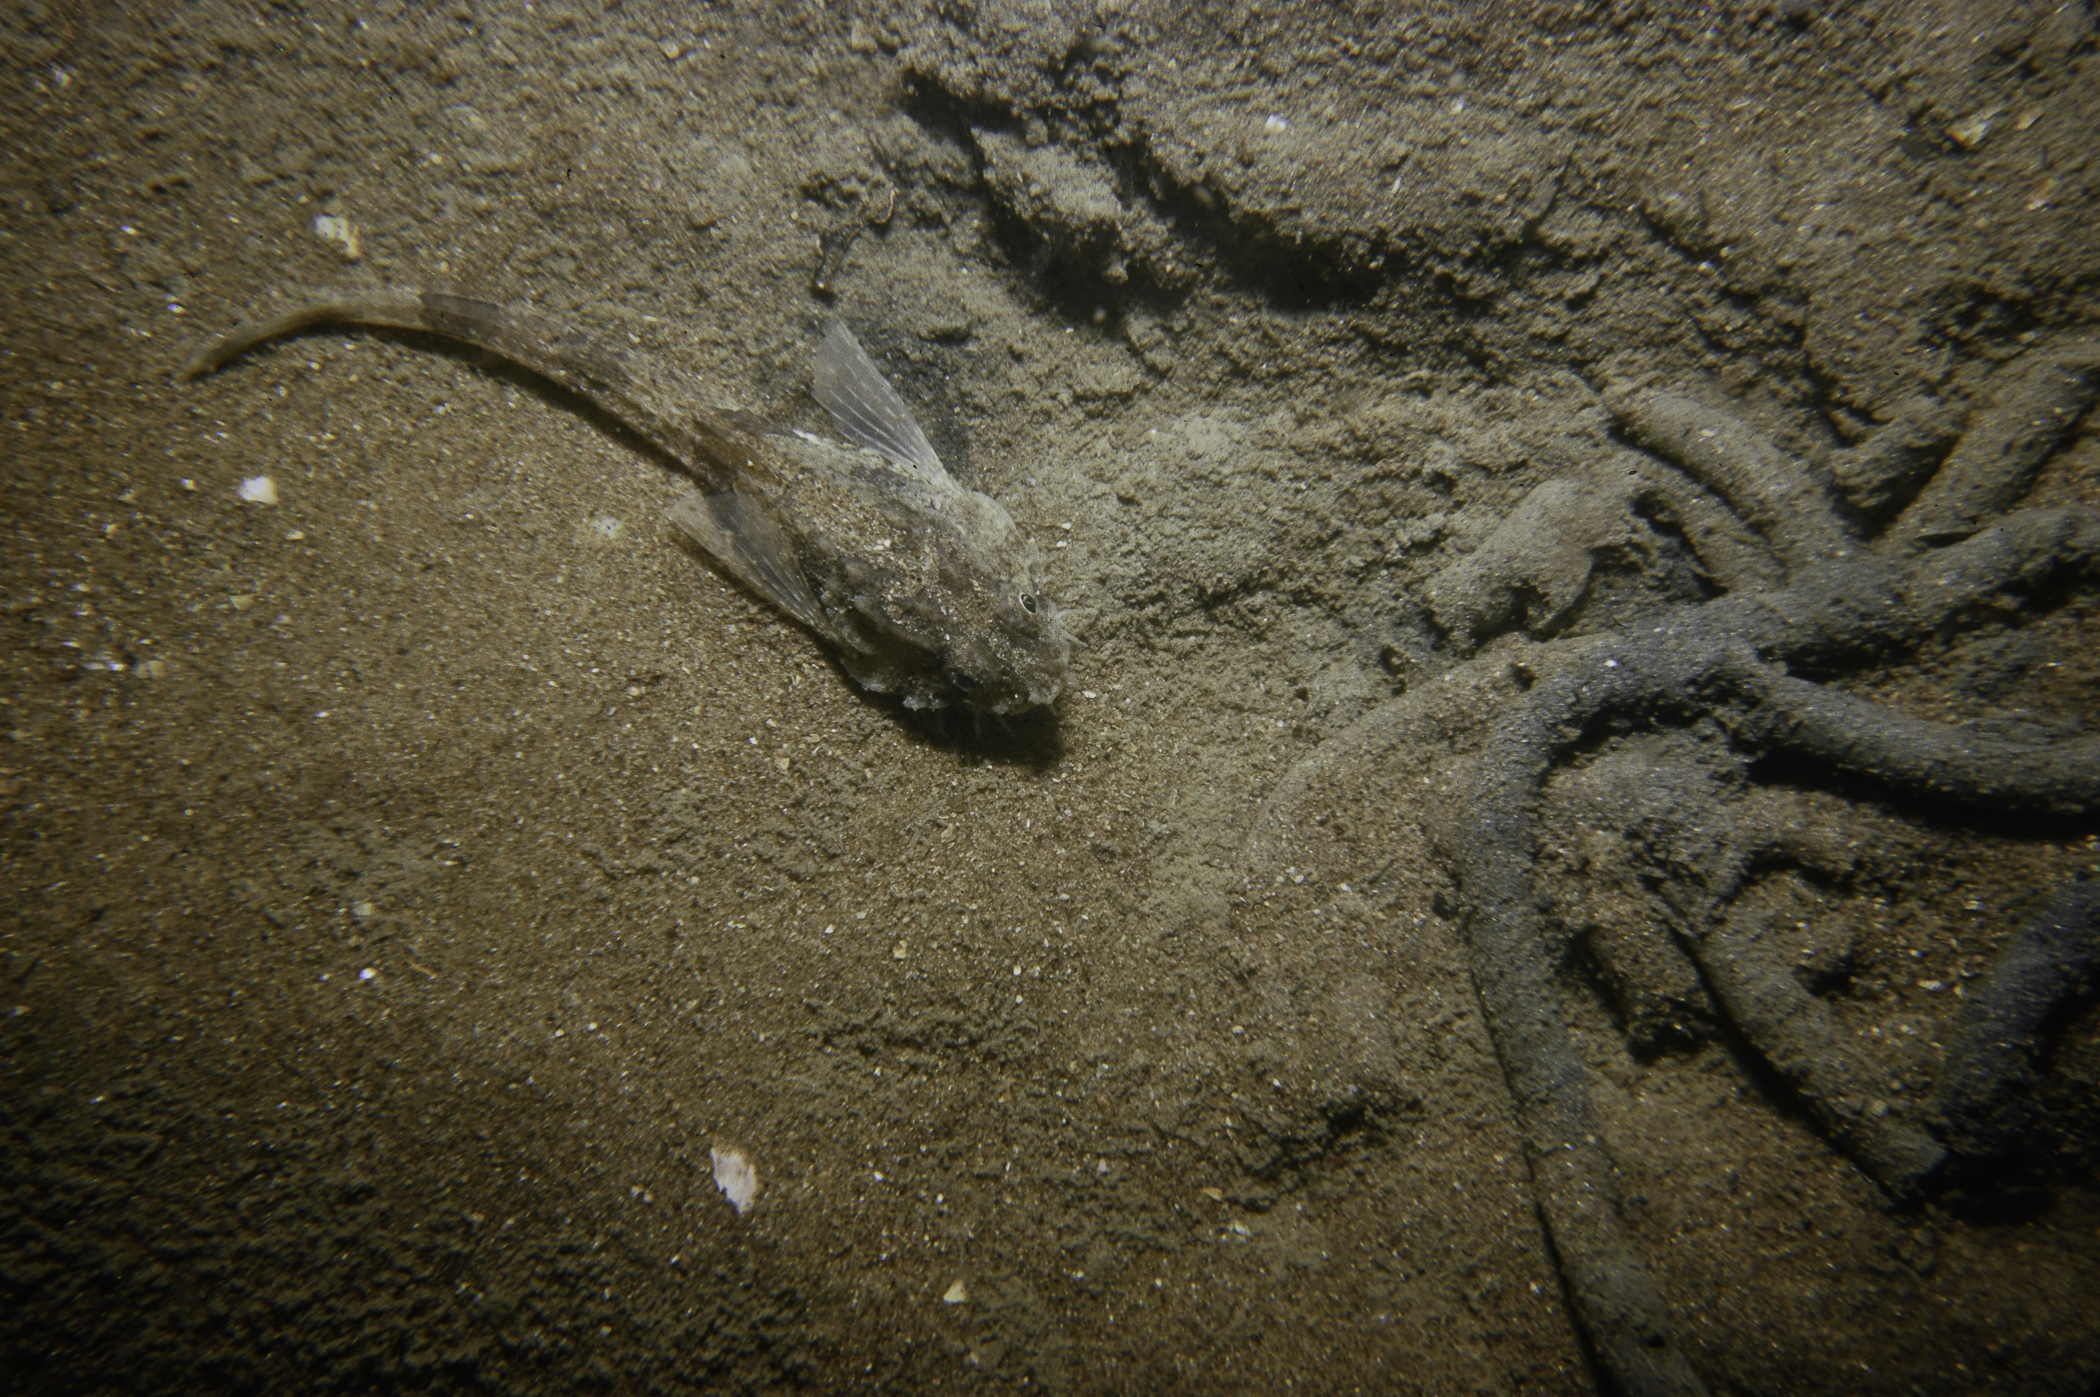 Agonus cataphractus. Site: East Channel, Lough Foyle. 